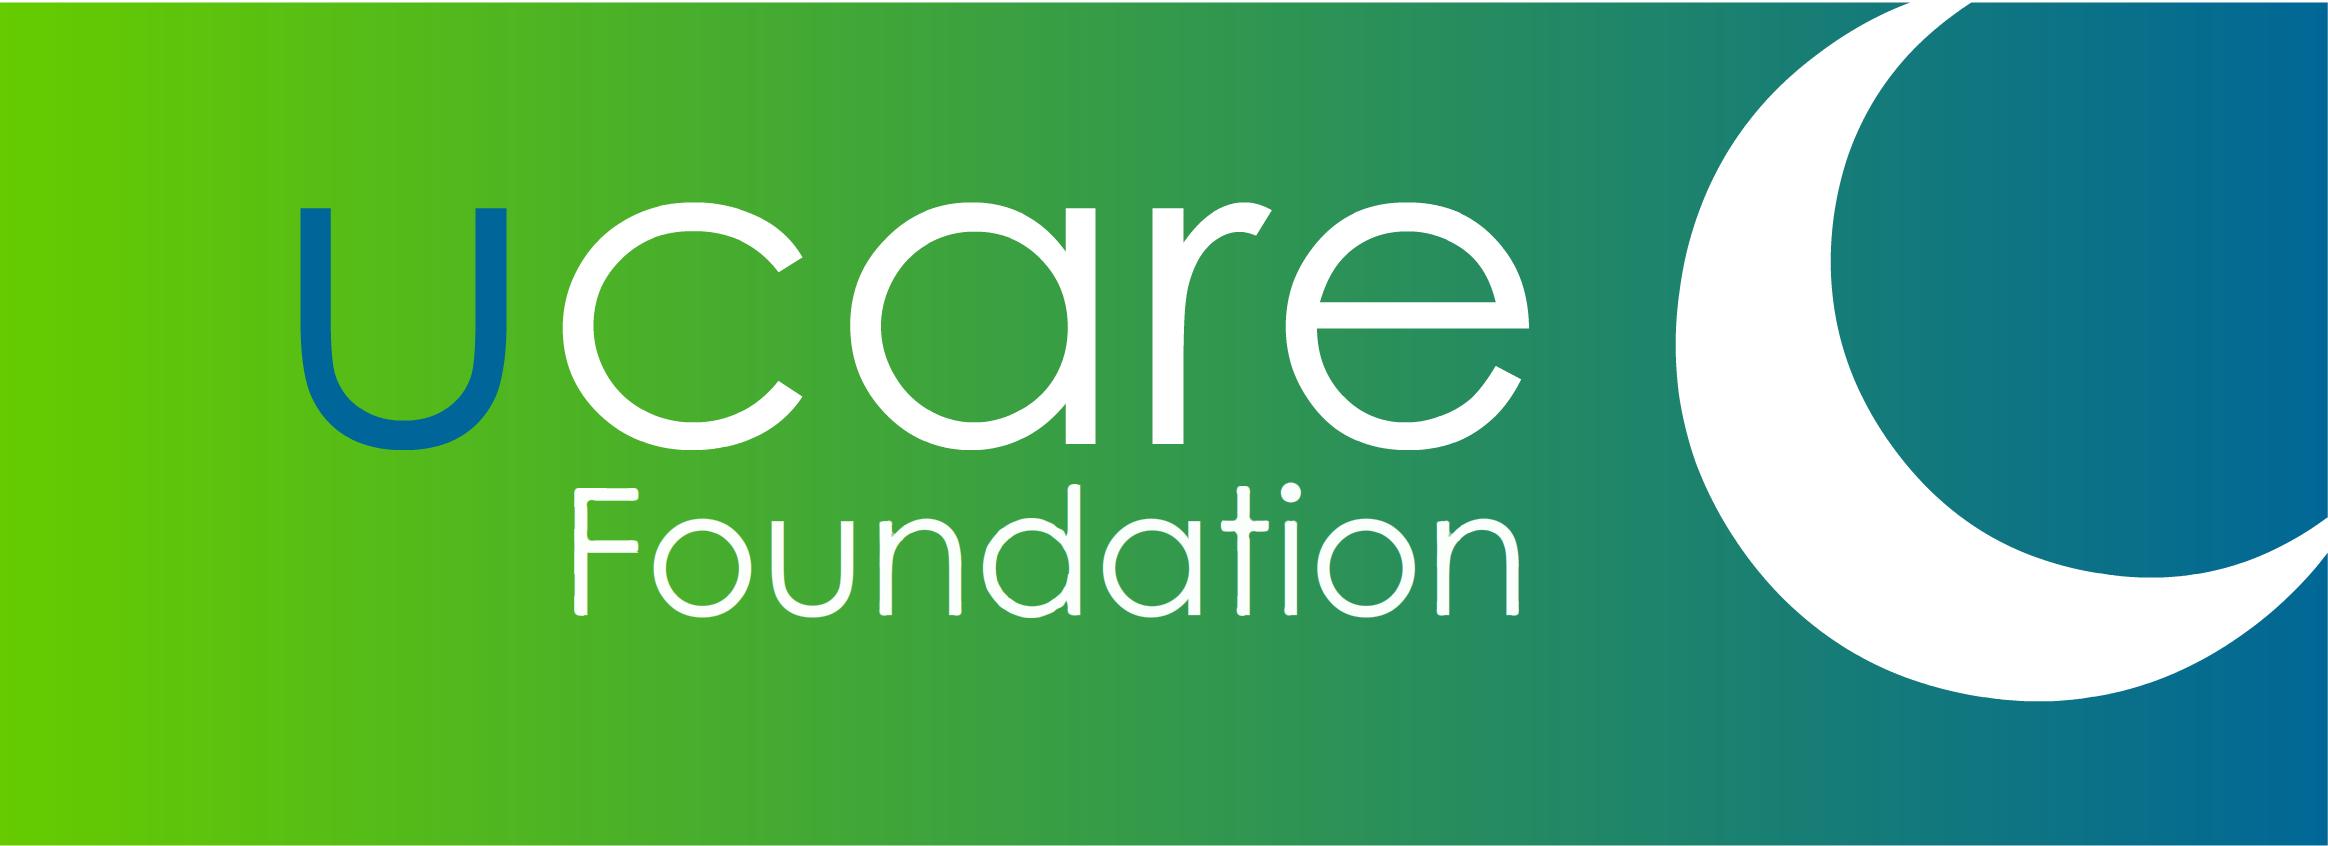 UCare Logo - UCare Foundation | Meena Bazar